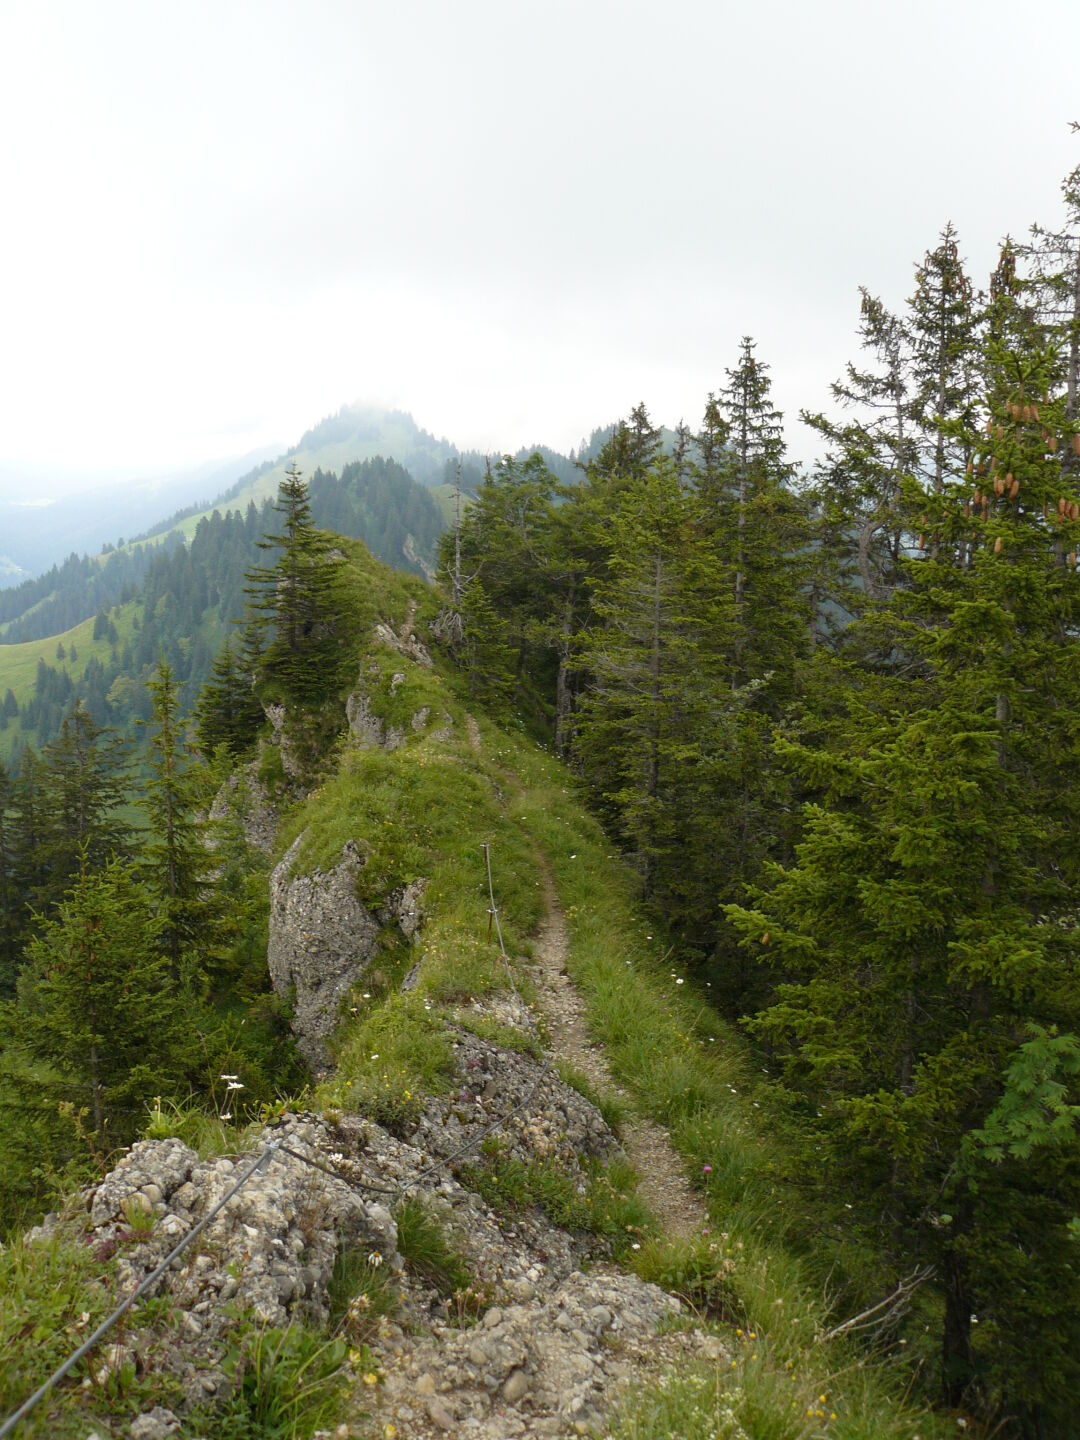 One of the narrow ridges of the Nagelfluh mountain range.